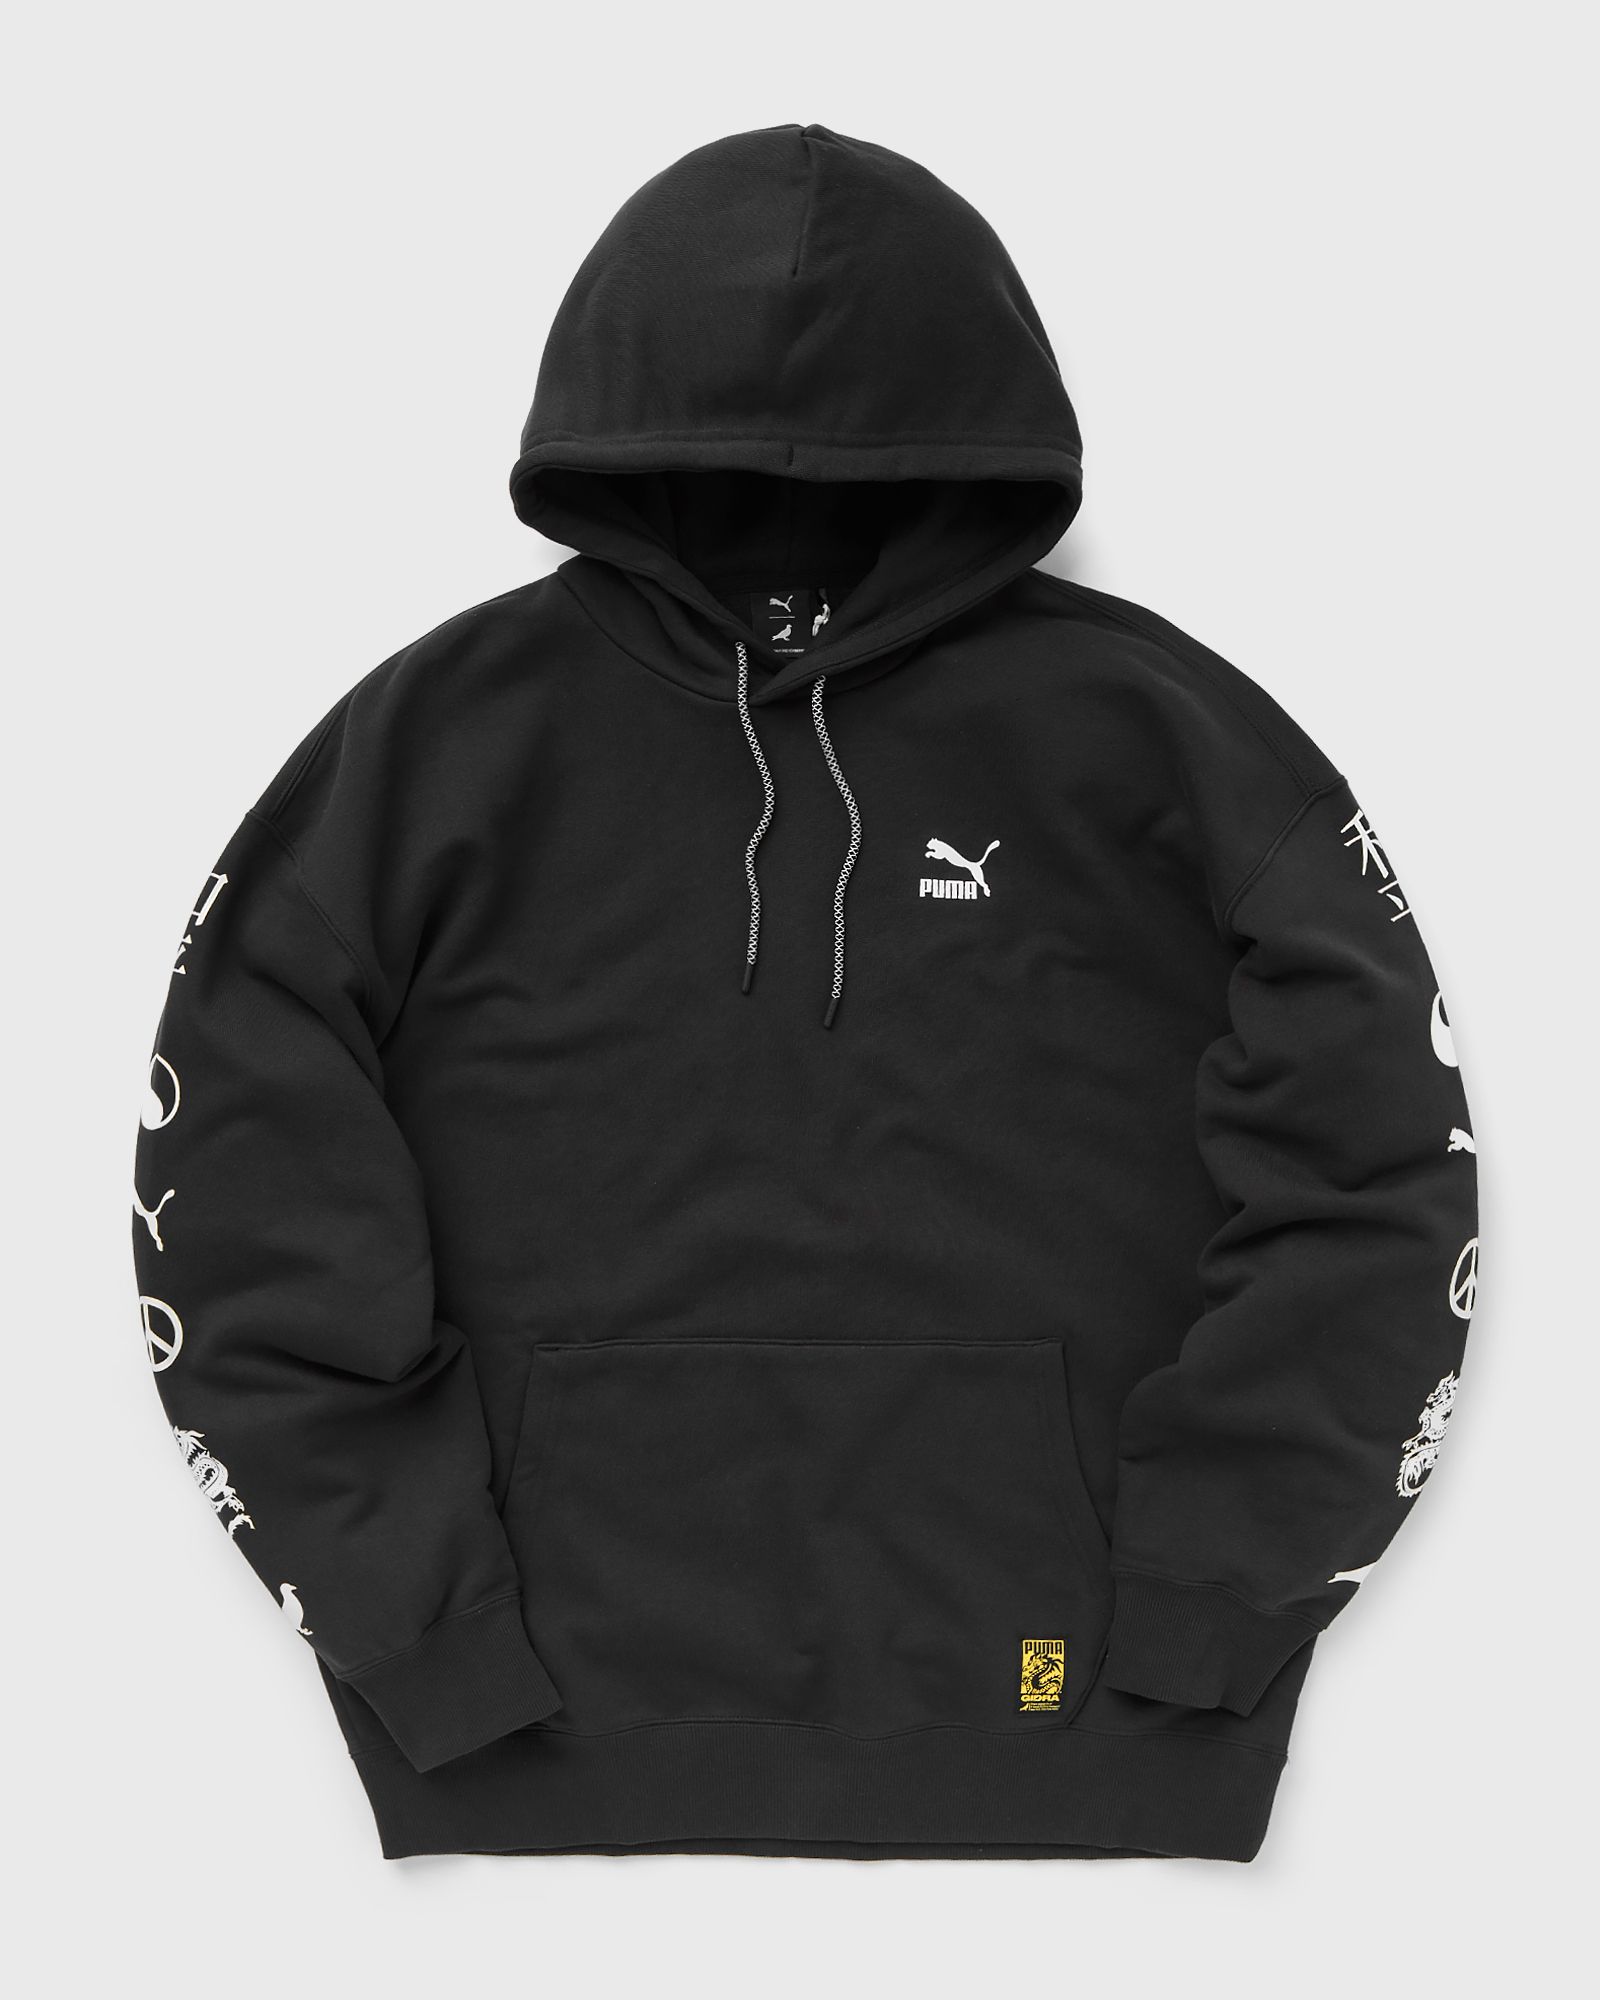 Puma - x staple graphic hoodie tr men hoodies black in größe:s